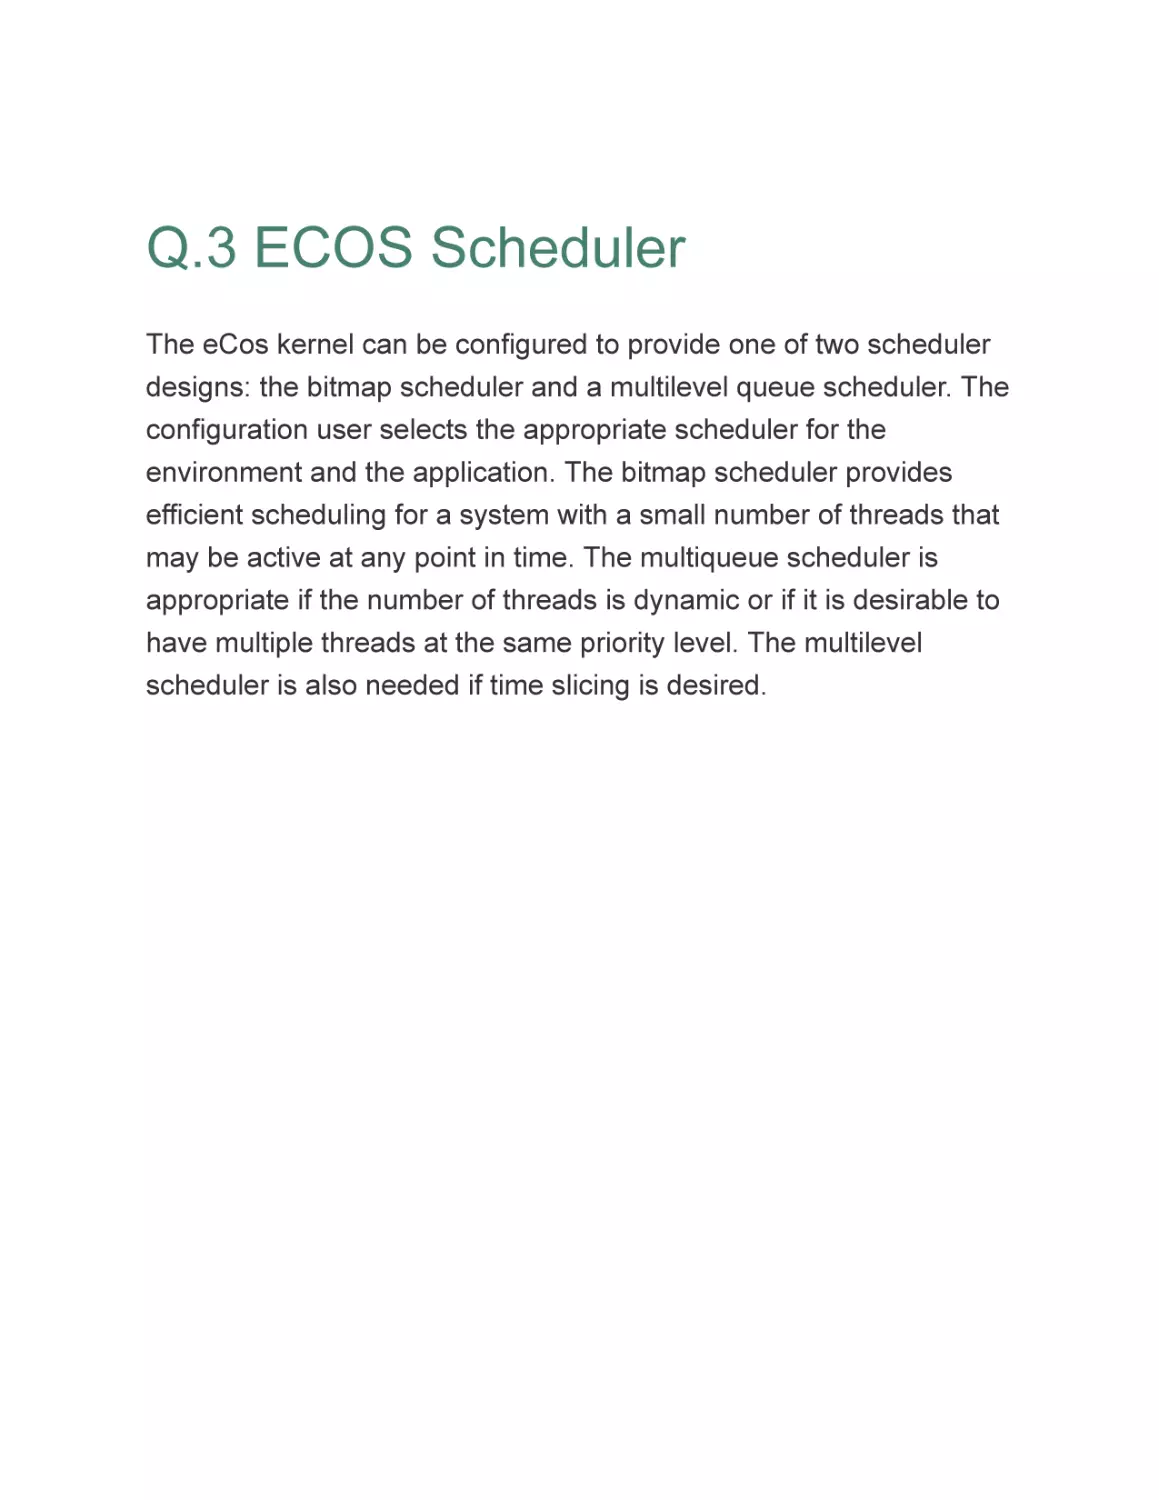 Q.3 ECOS Scheduler